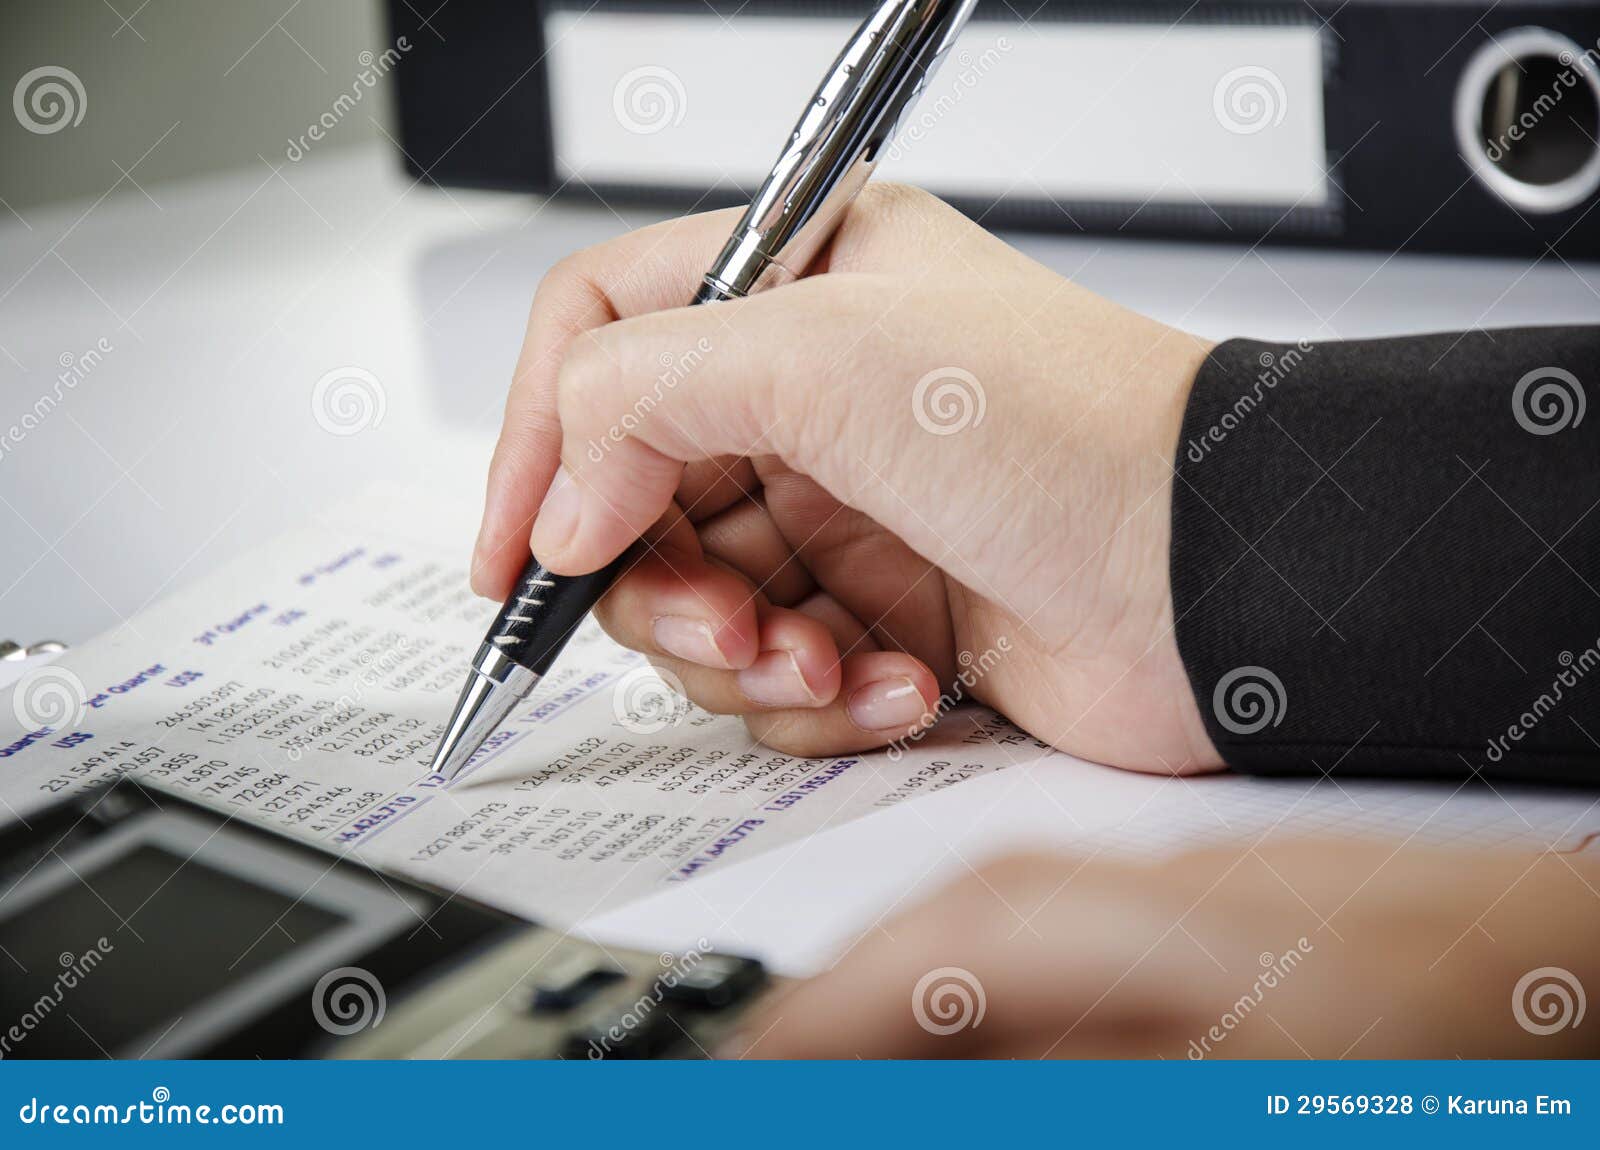 Business calculating stock photo. Image of handwriting - 29569328